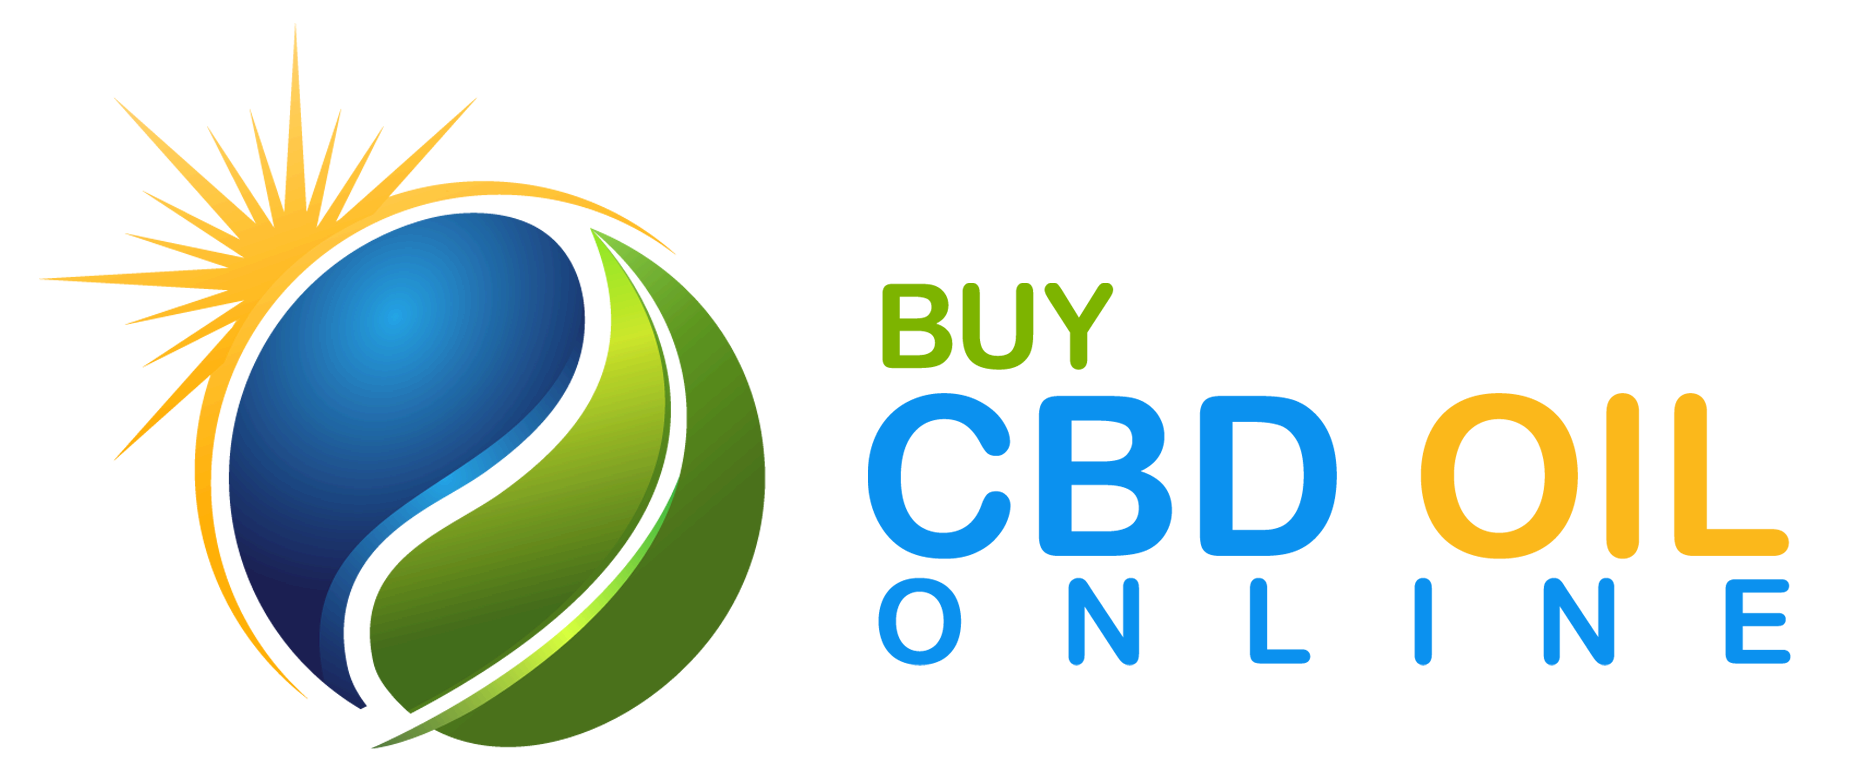 Buy CBD Oil Online Dixie Botanicals 1oz 100mg Cinnamon Dew Drops